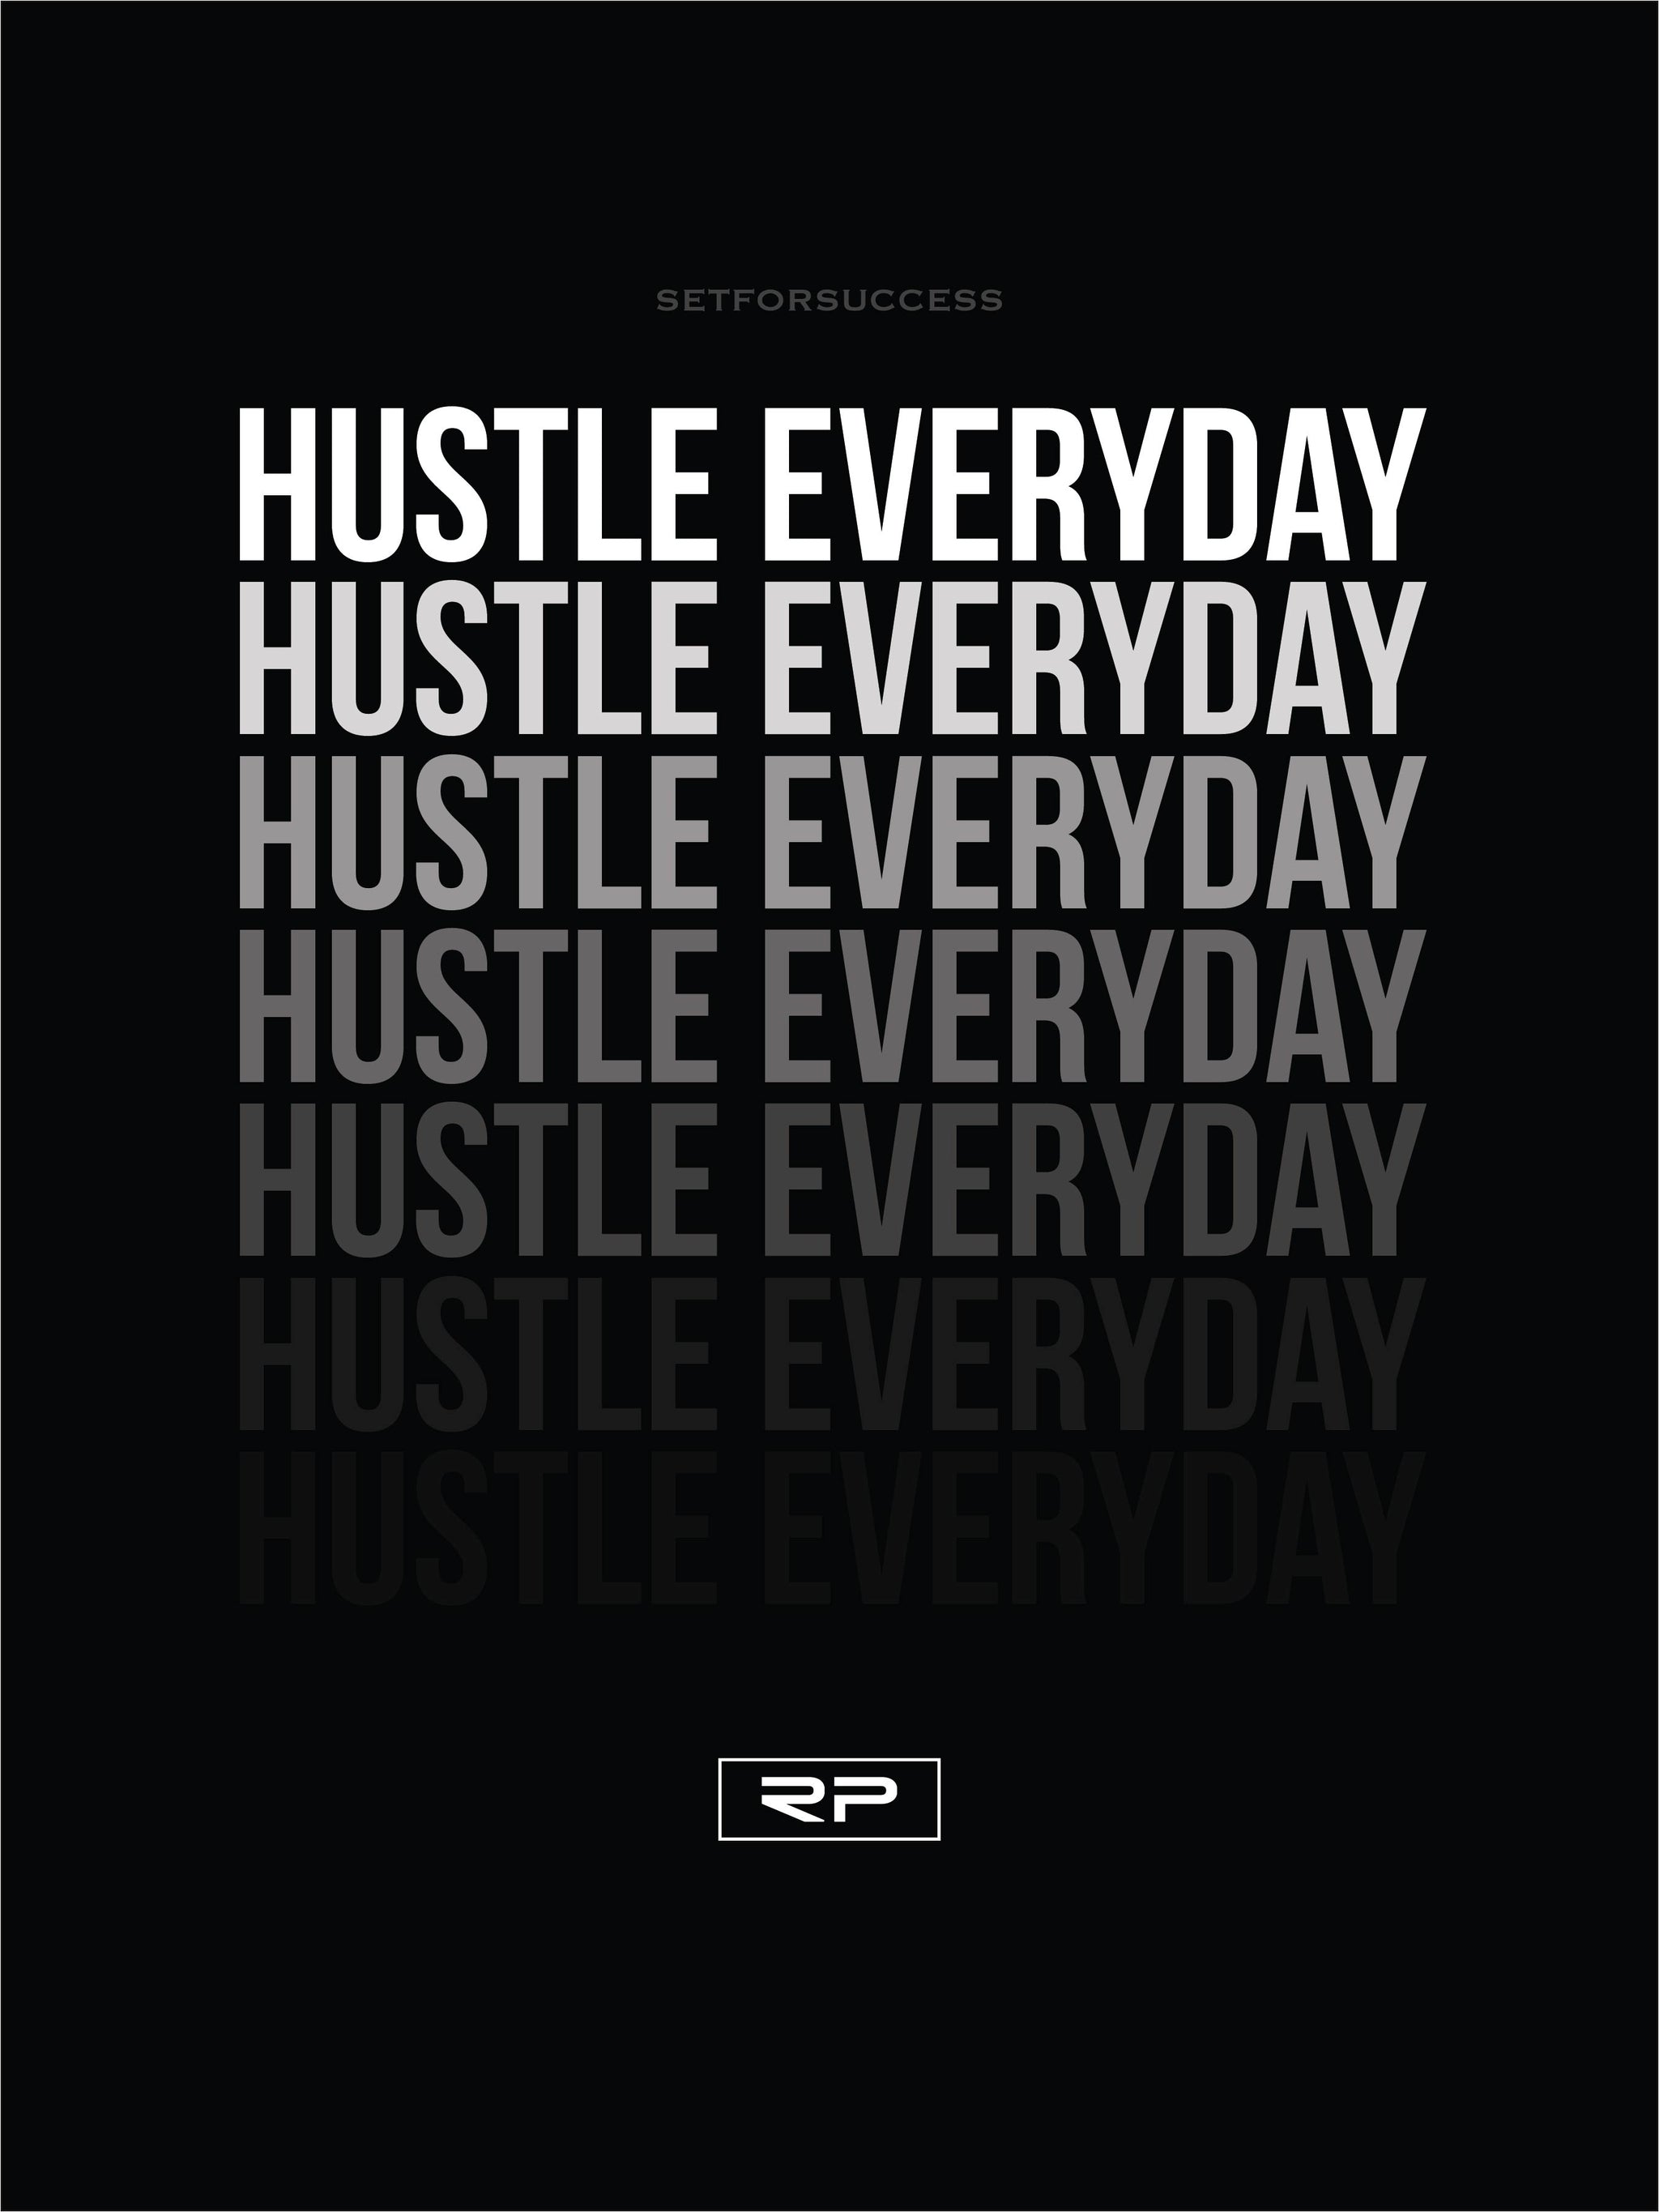 Everyday. Hustle.